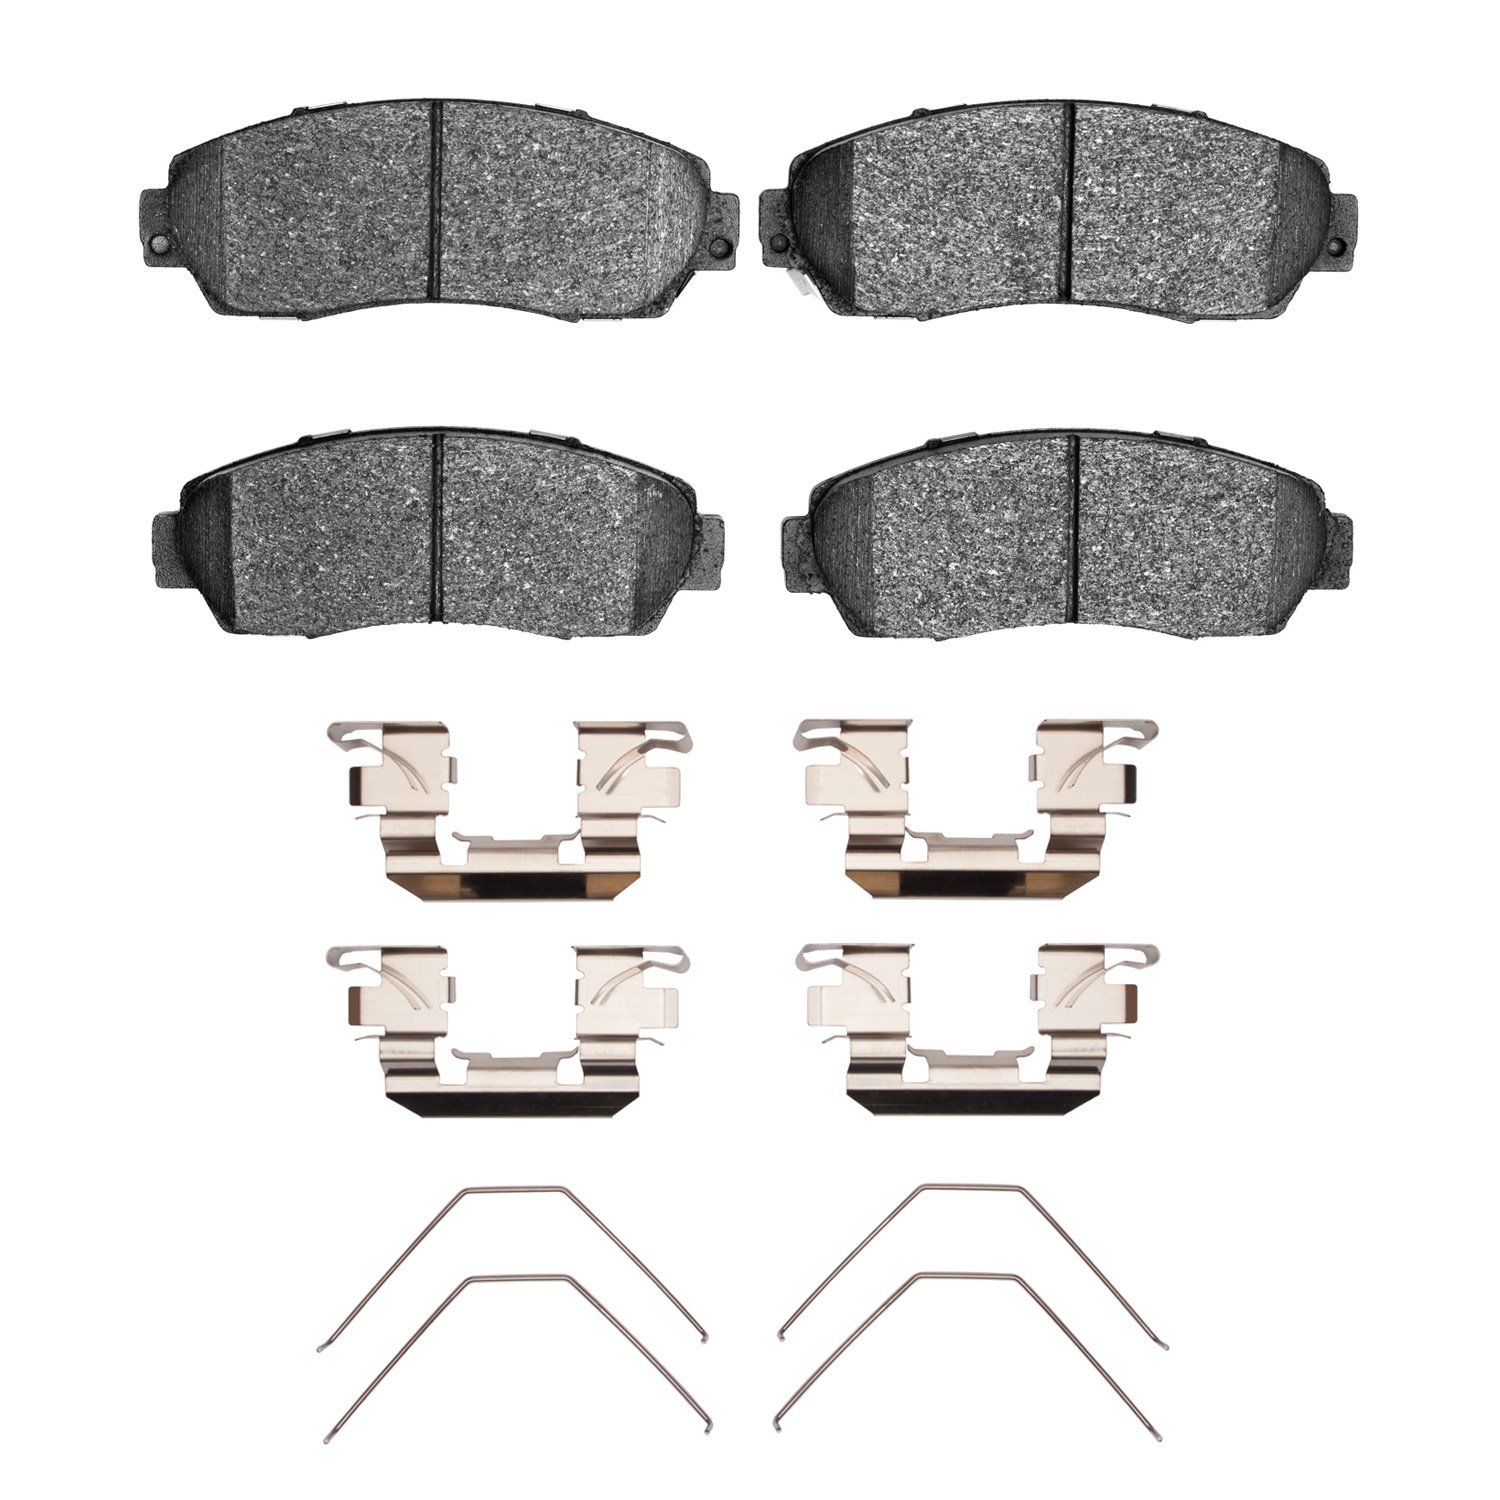 1551-1521-01 5000 Advanced Ceramic Brake Pads & Hardware Kit, Fits Select Multiple Makes/Models, Position: Front